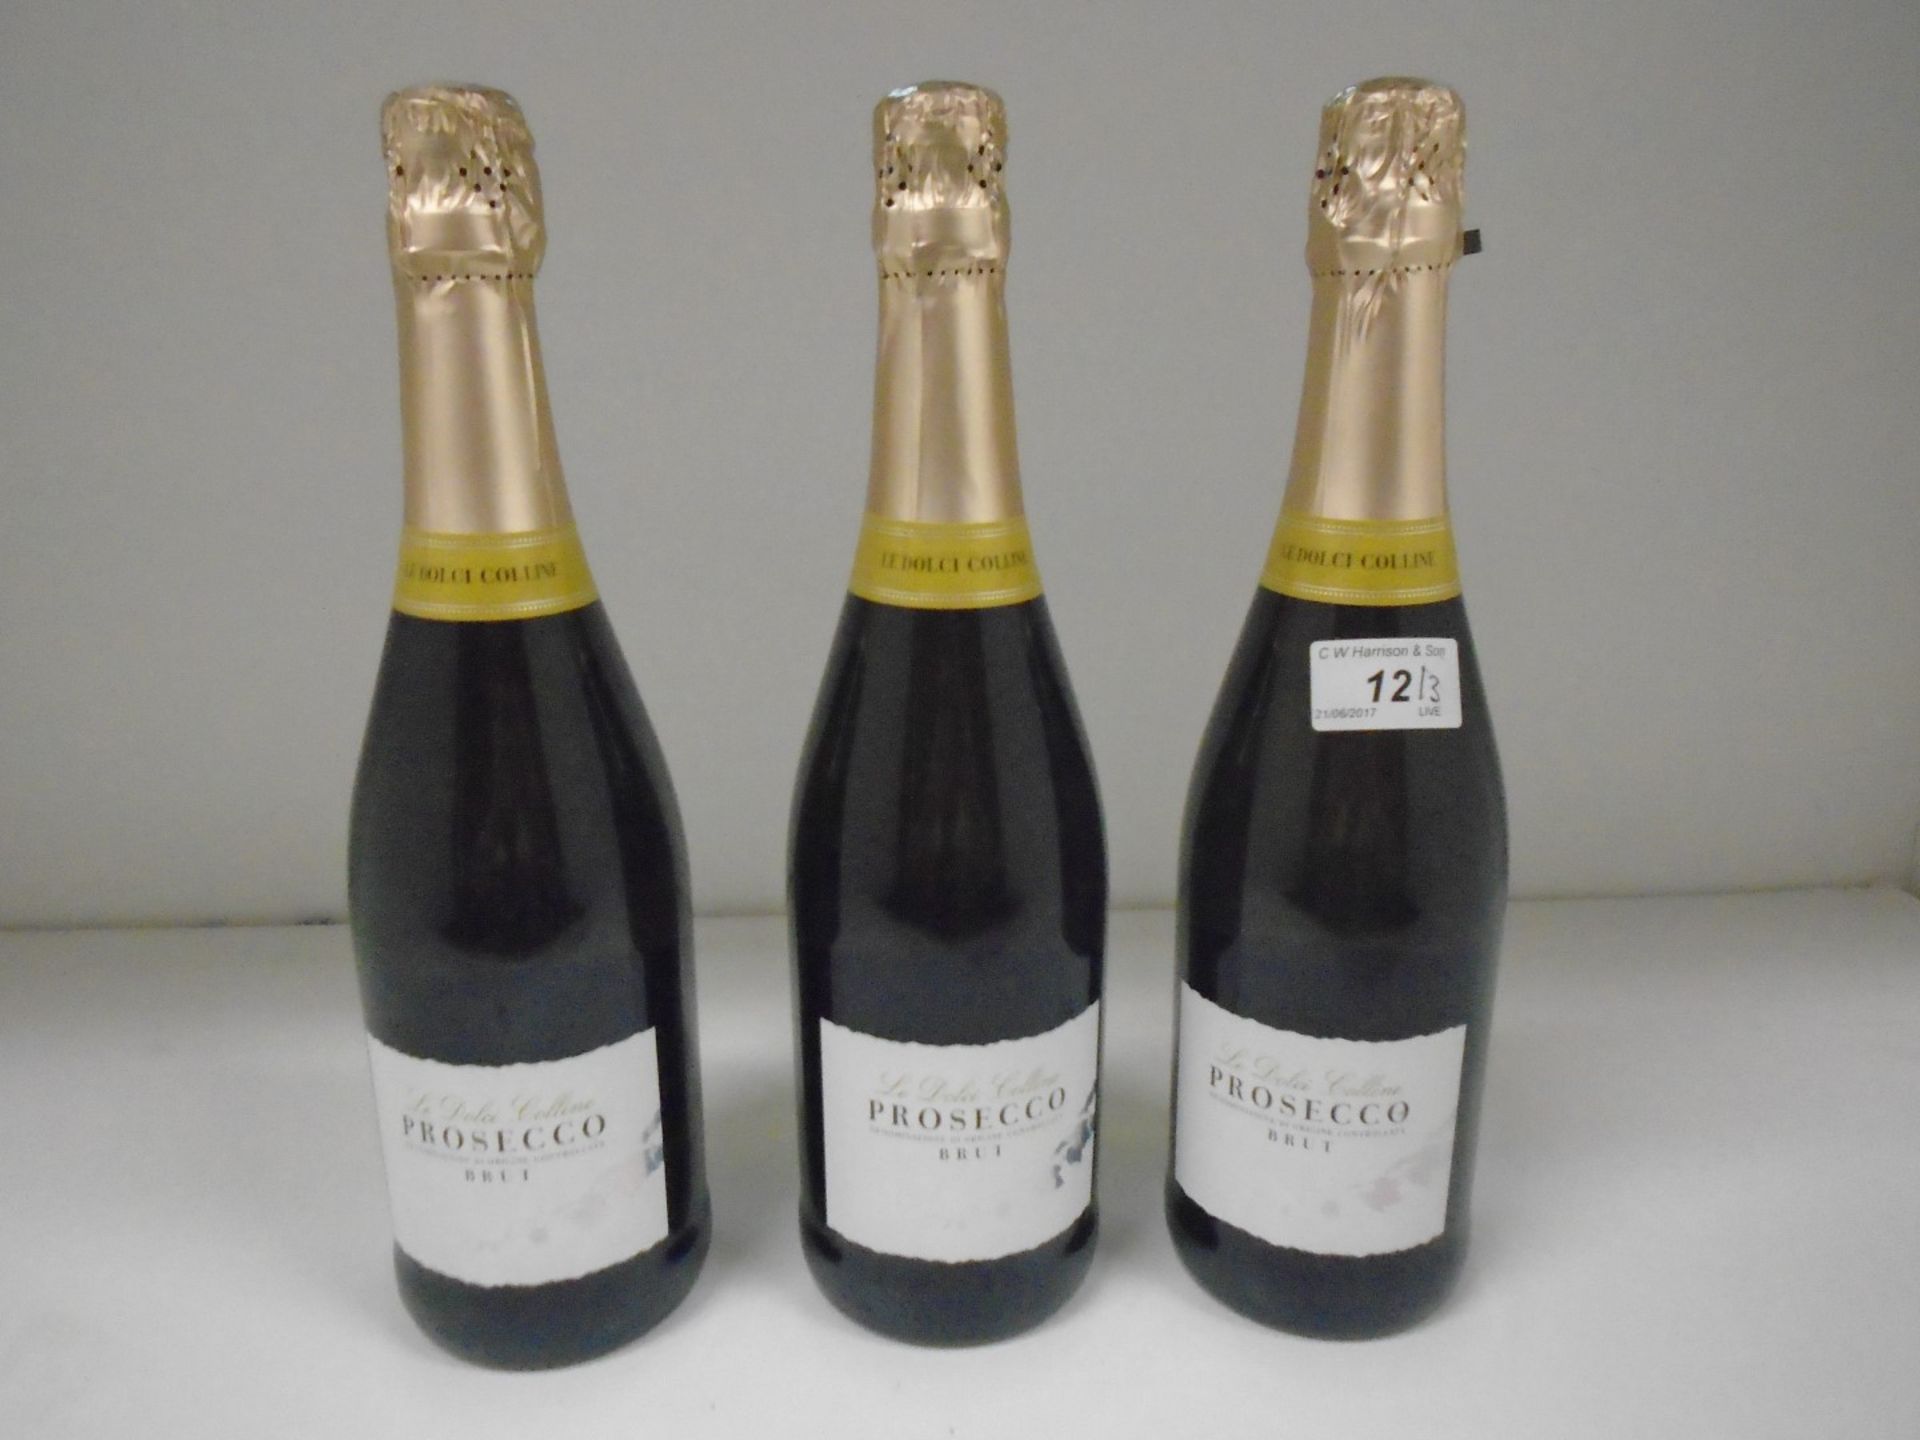 3 x 75cl bottles of Le Dolce Colline Prosecco Brut